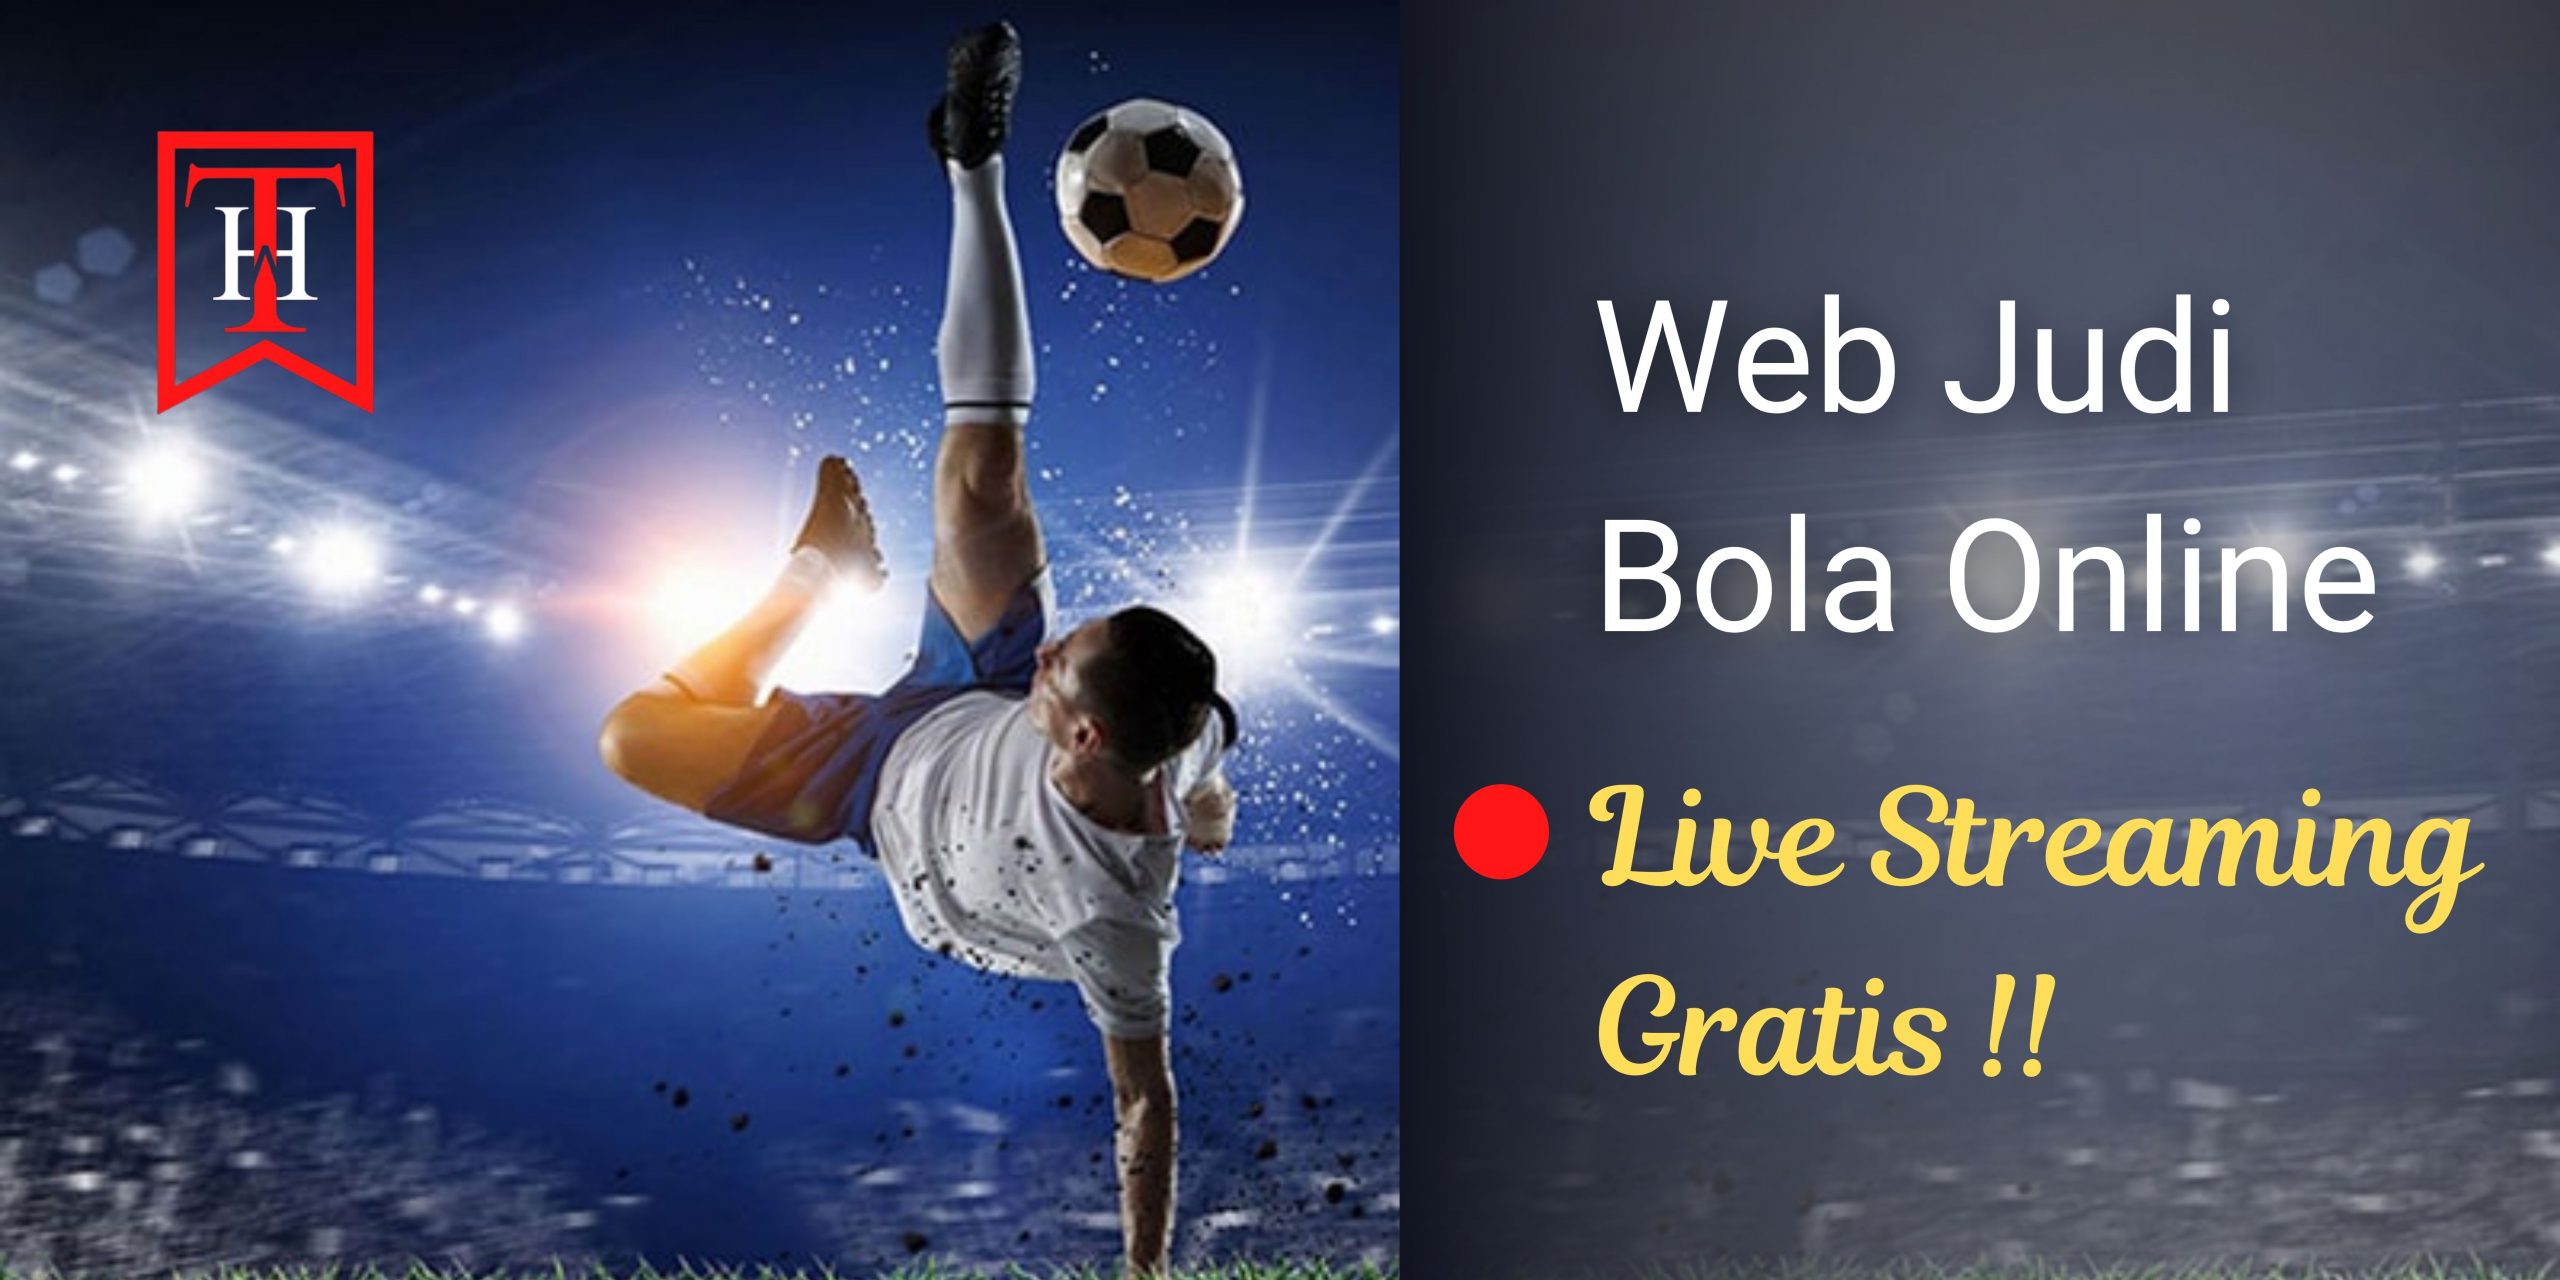 Web Judi Bola Online Live Streaming Gratis